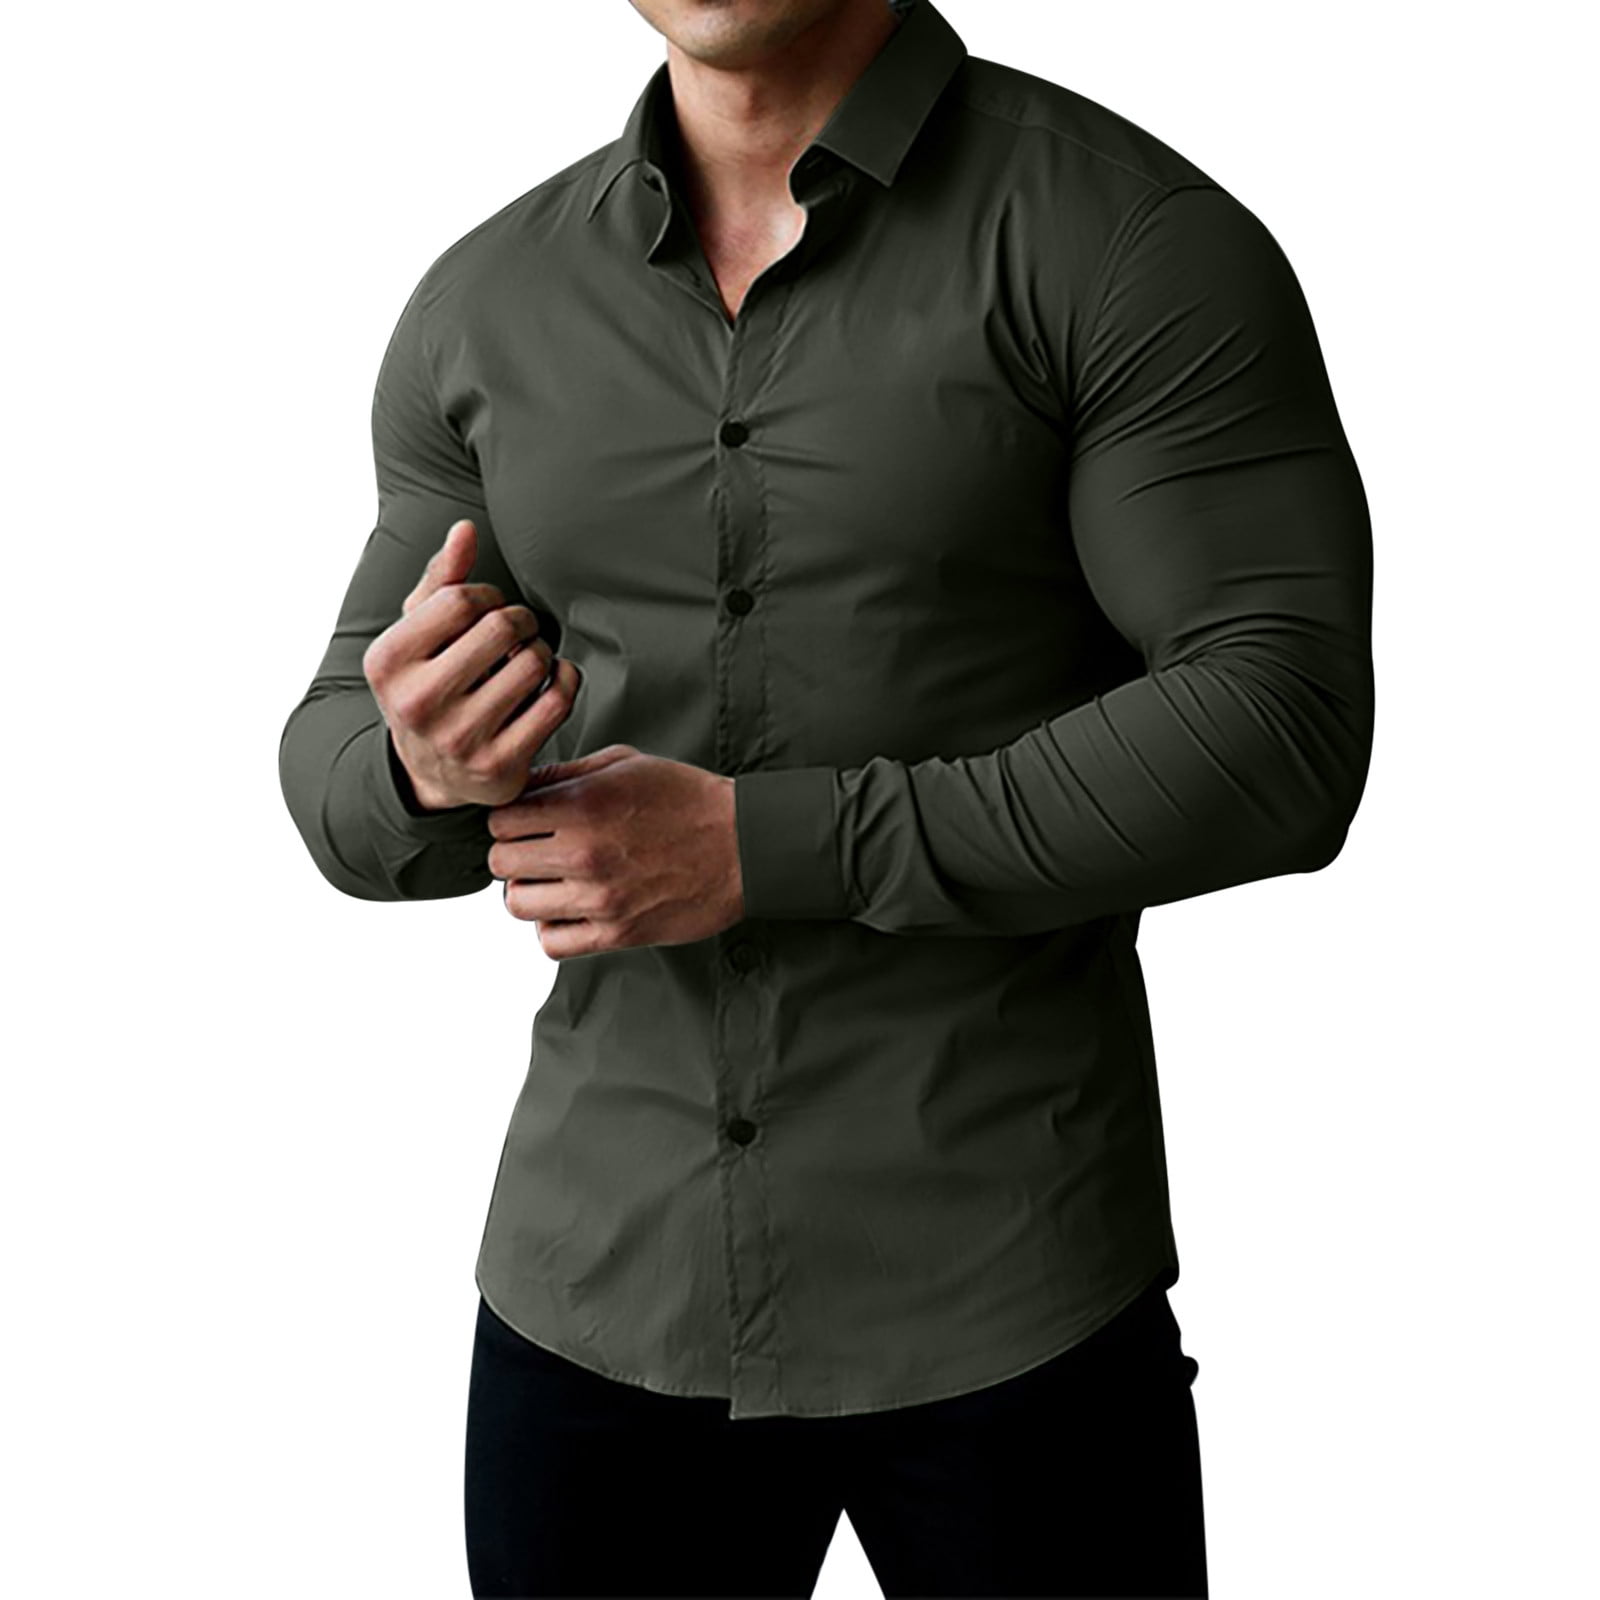 Men's Long Sleeve Shirts - Formal & Casual Tops